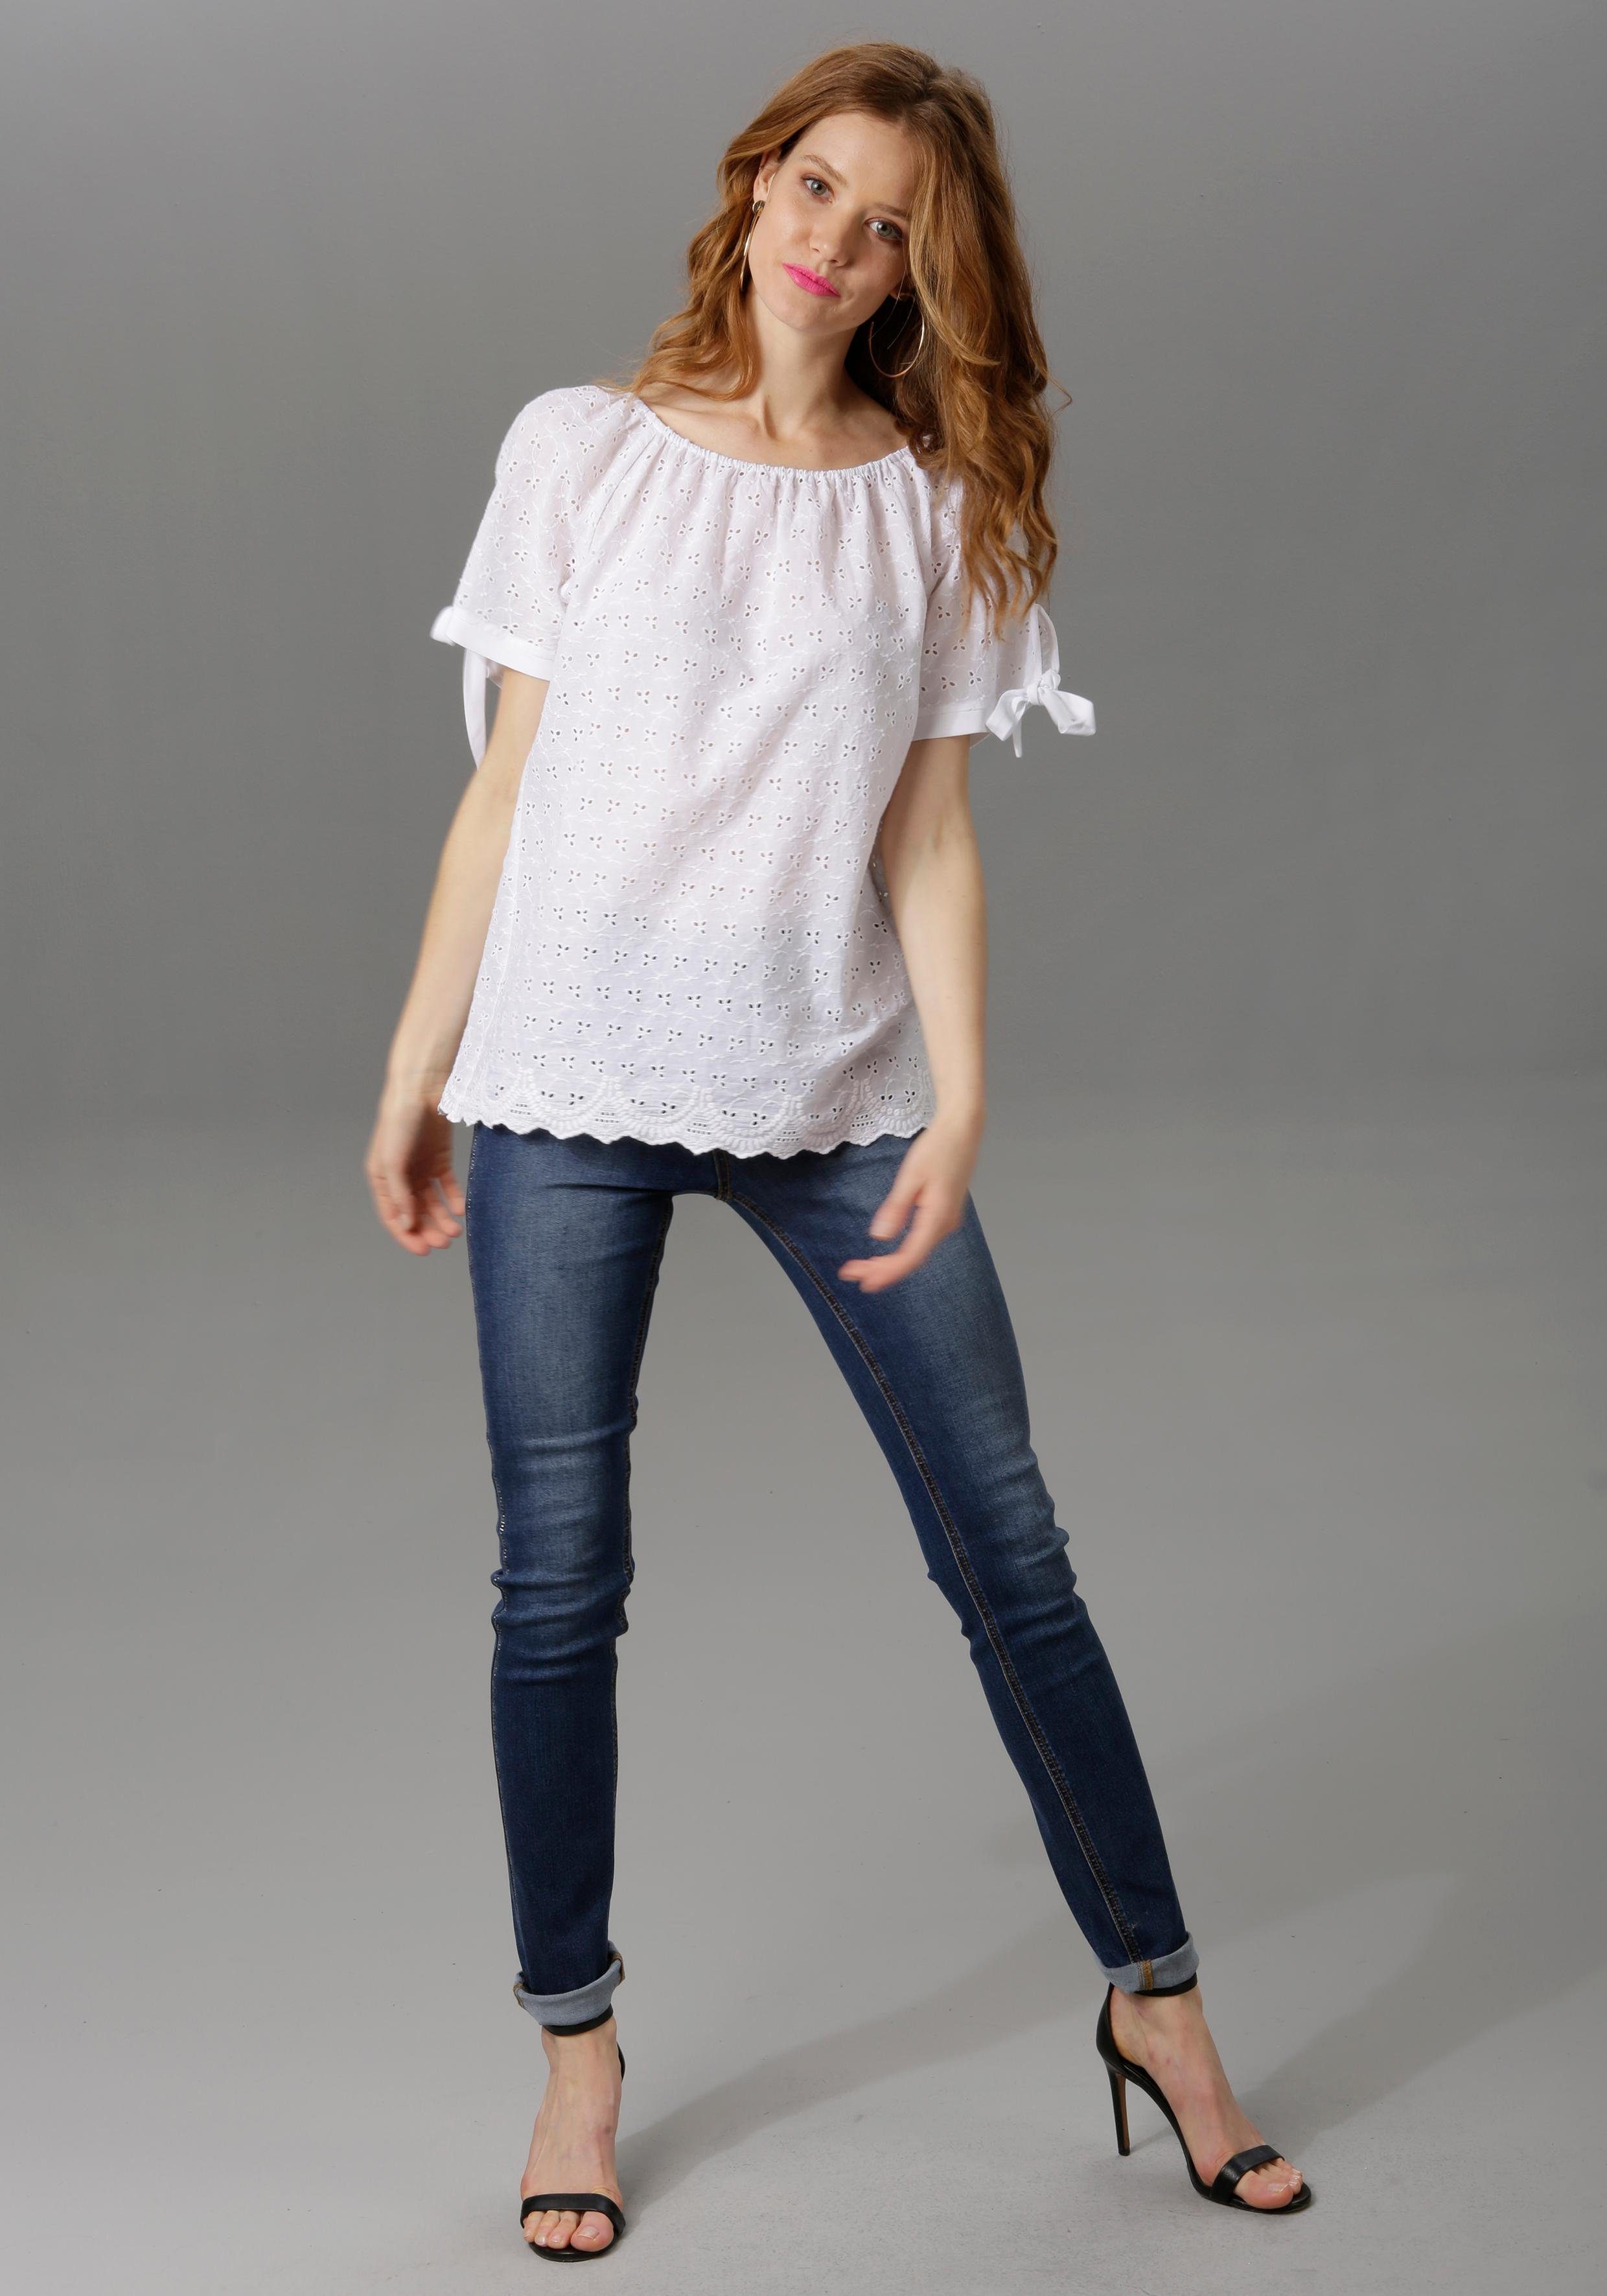 Damen Jeans Aniston CASUAL Slim-fit-Jeans regular waist